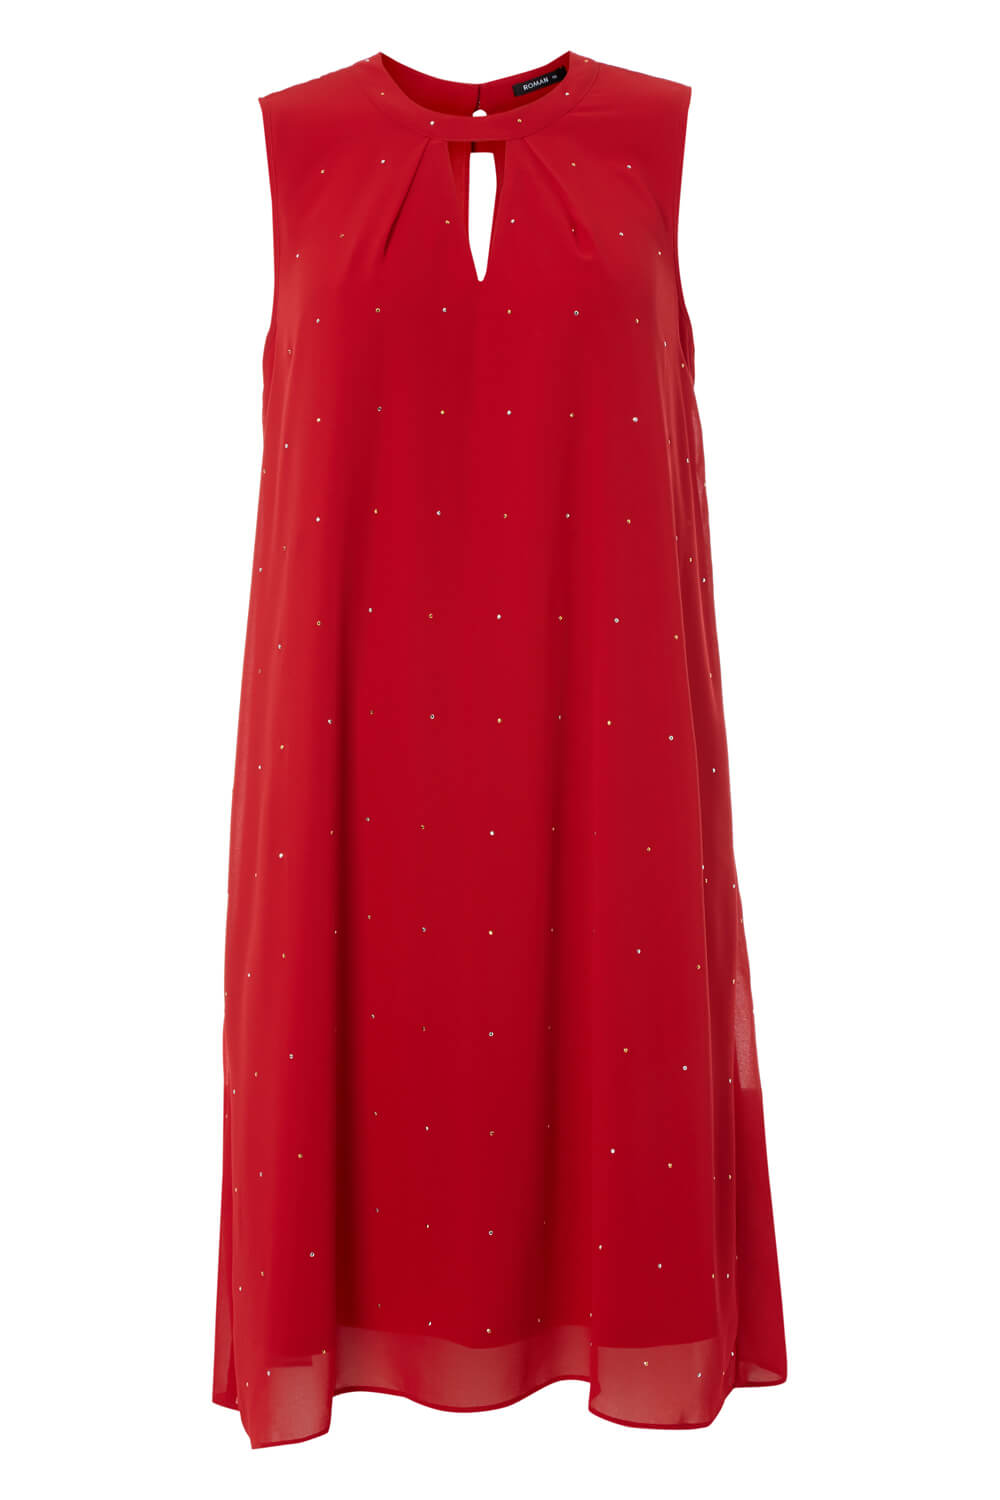 Embellished Chiffon Swing Dress in RED - Roman Originals UK